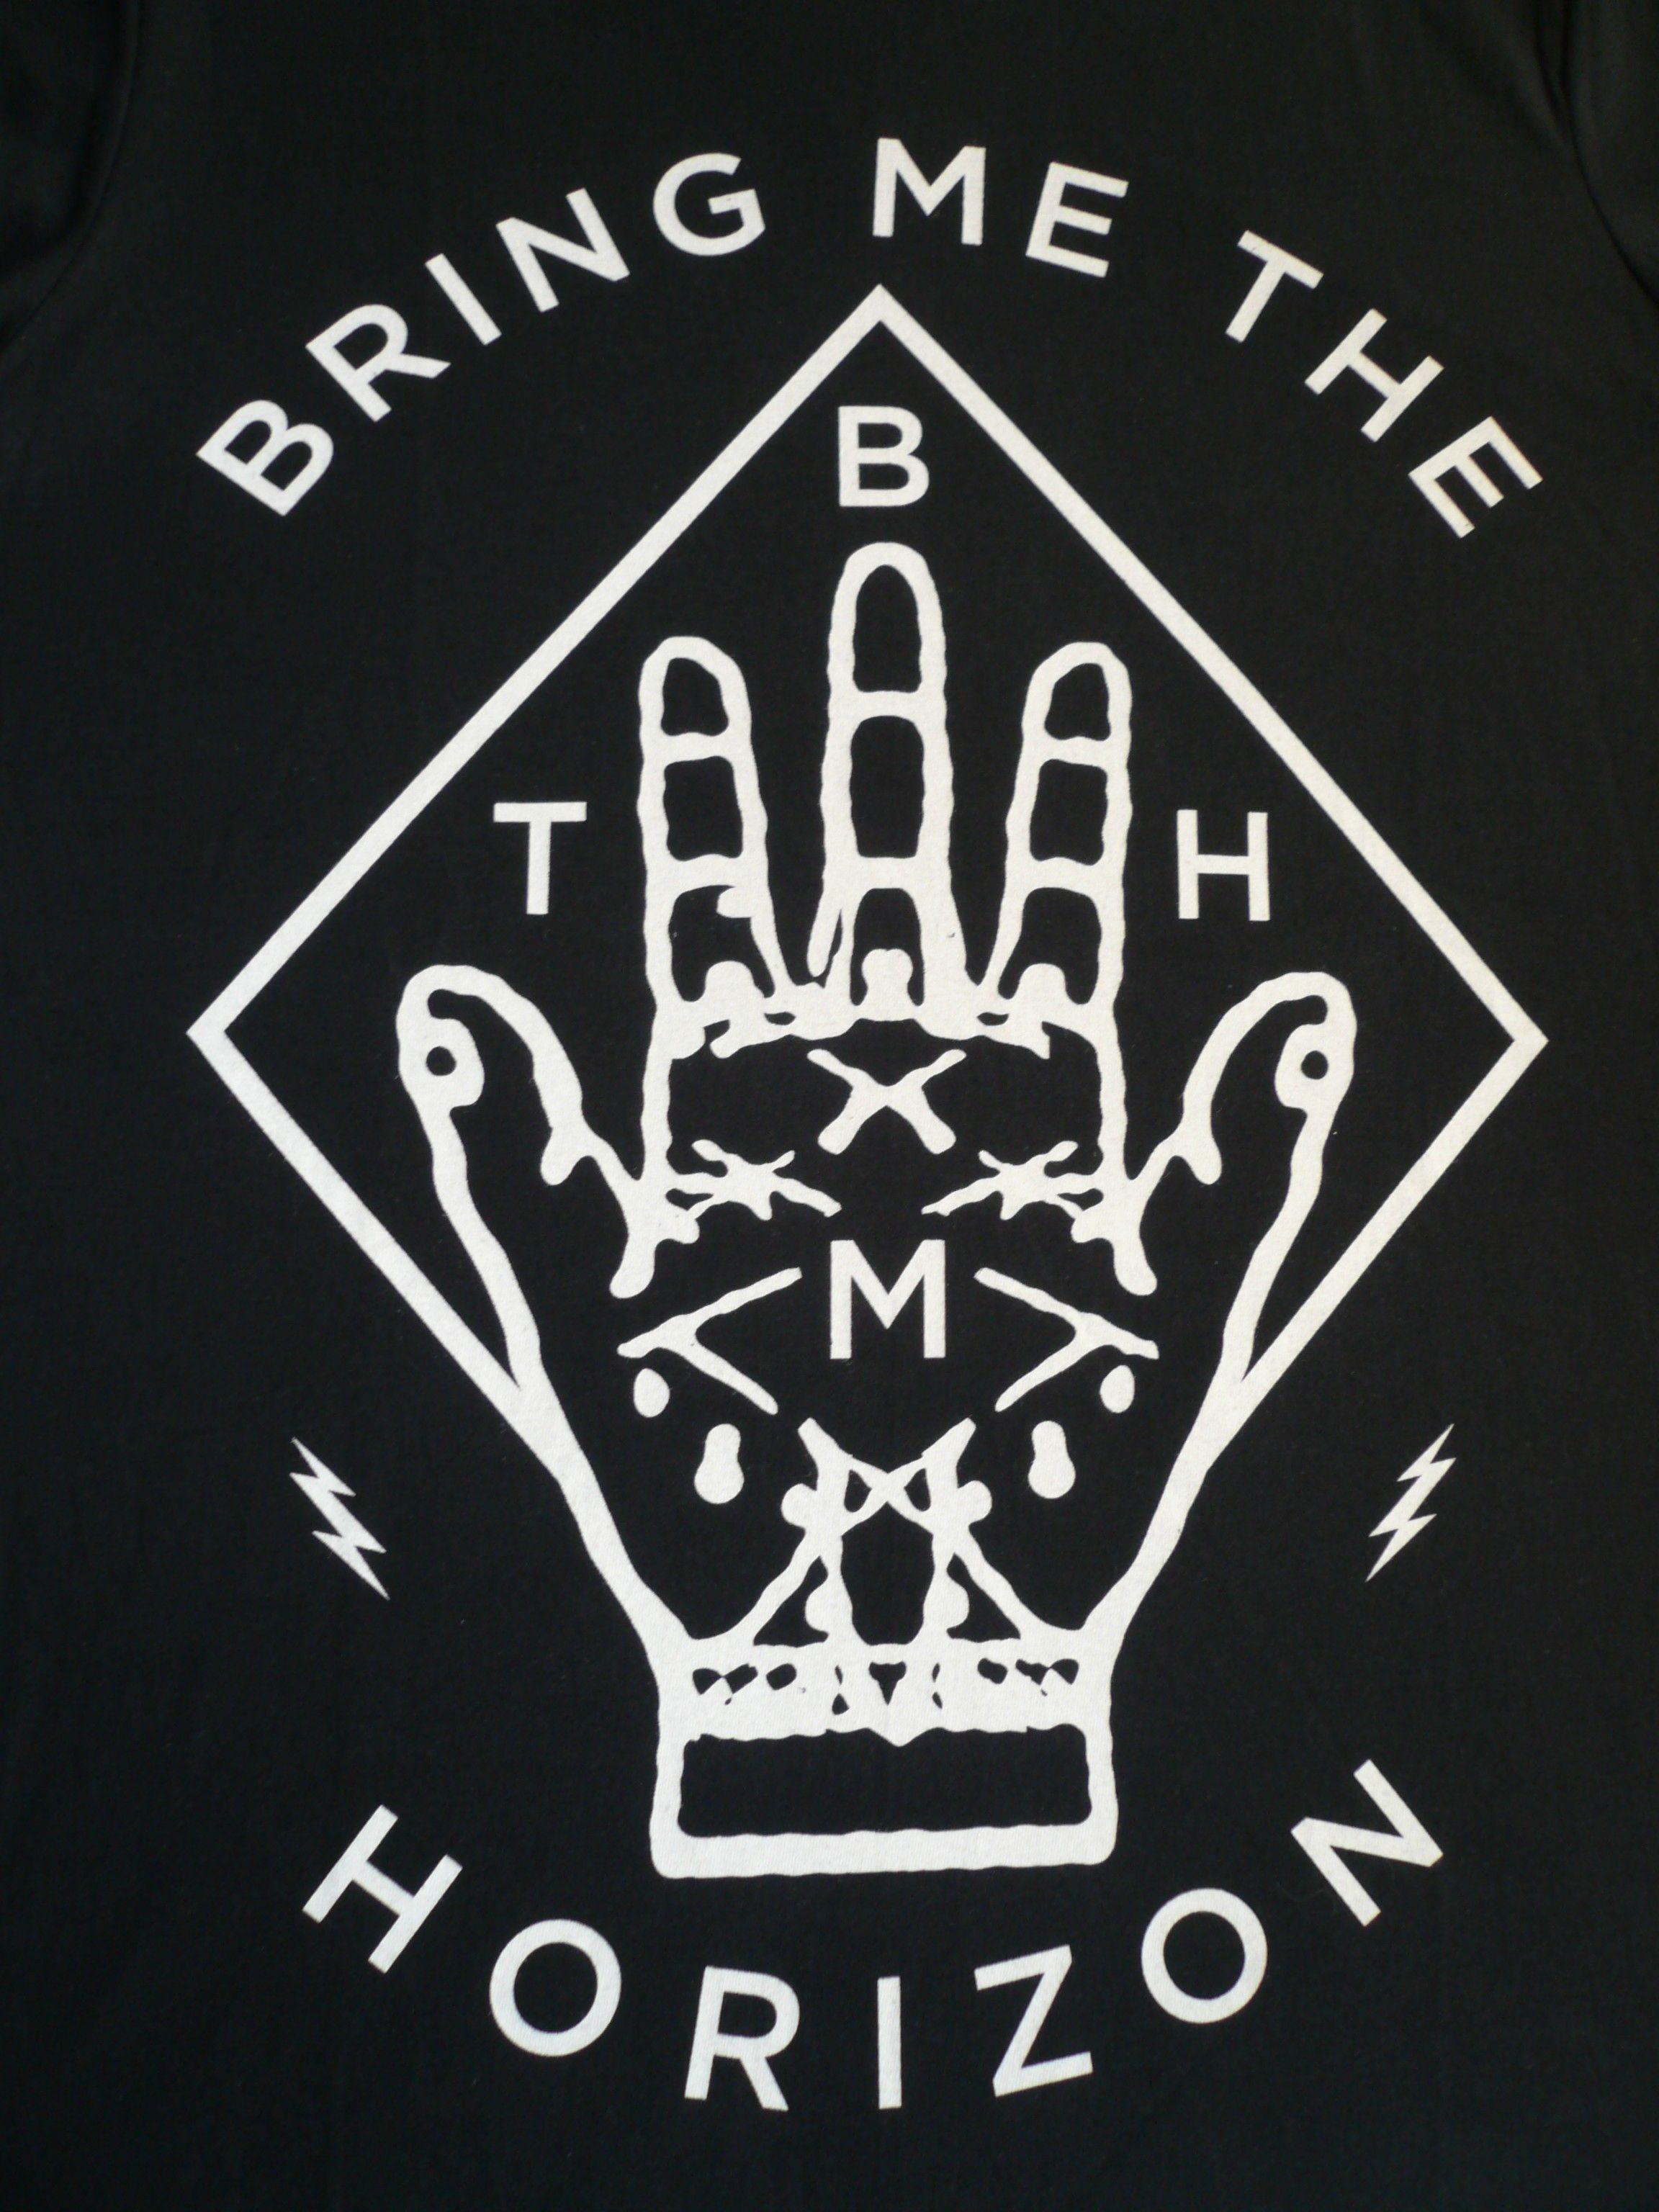 Bring Me the Horizon Logo - Bring Me the Horizon Diamond hand T-Shirt Amsterdam Waterlooplein